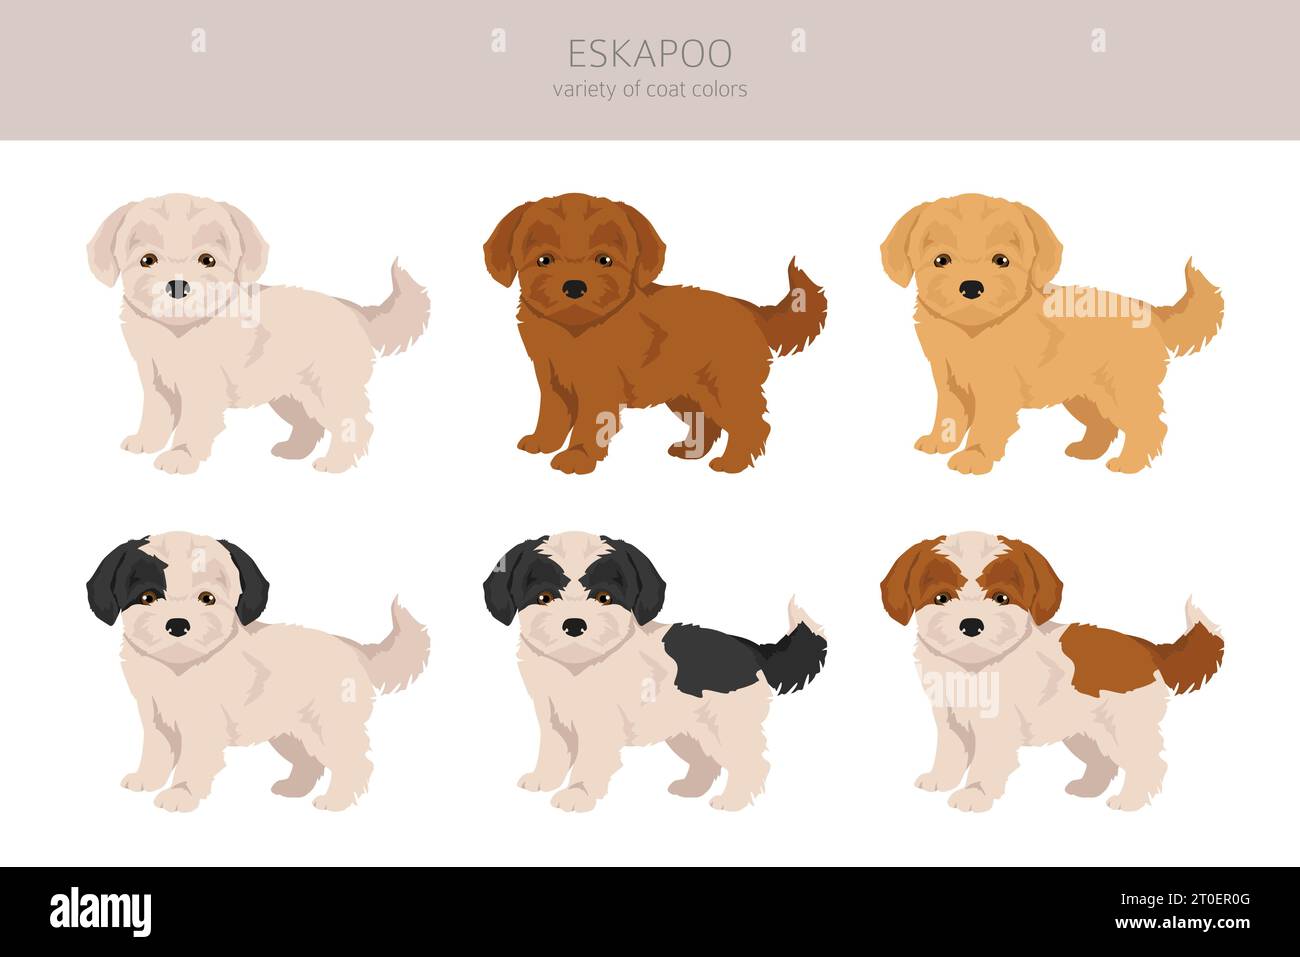 Eskapoo clipart. Eskimo dog Poodle mix. Different coat colors set.  Vector illustration Stock Vector